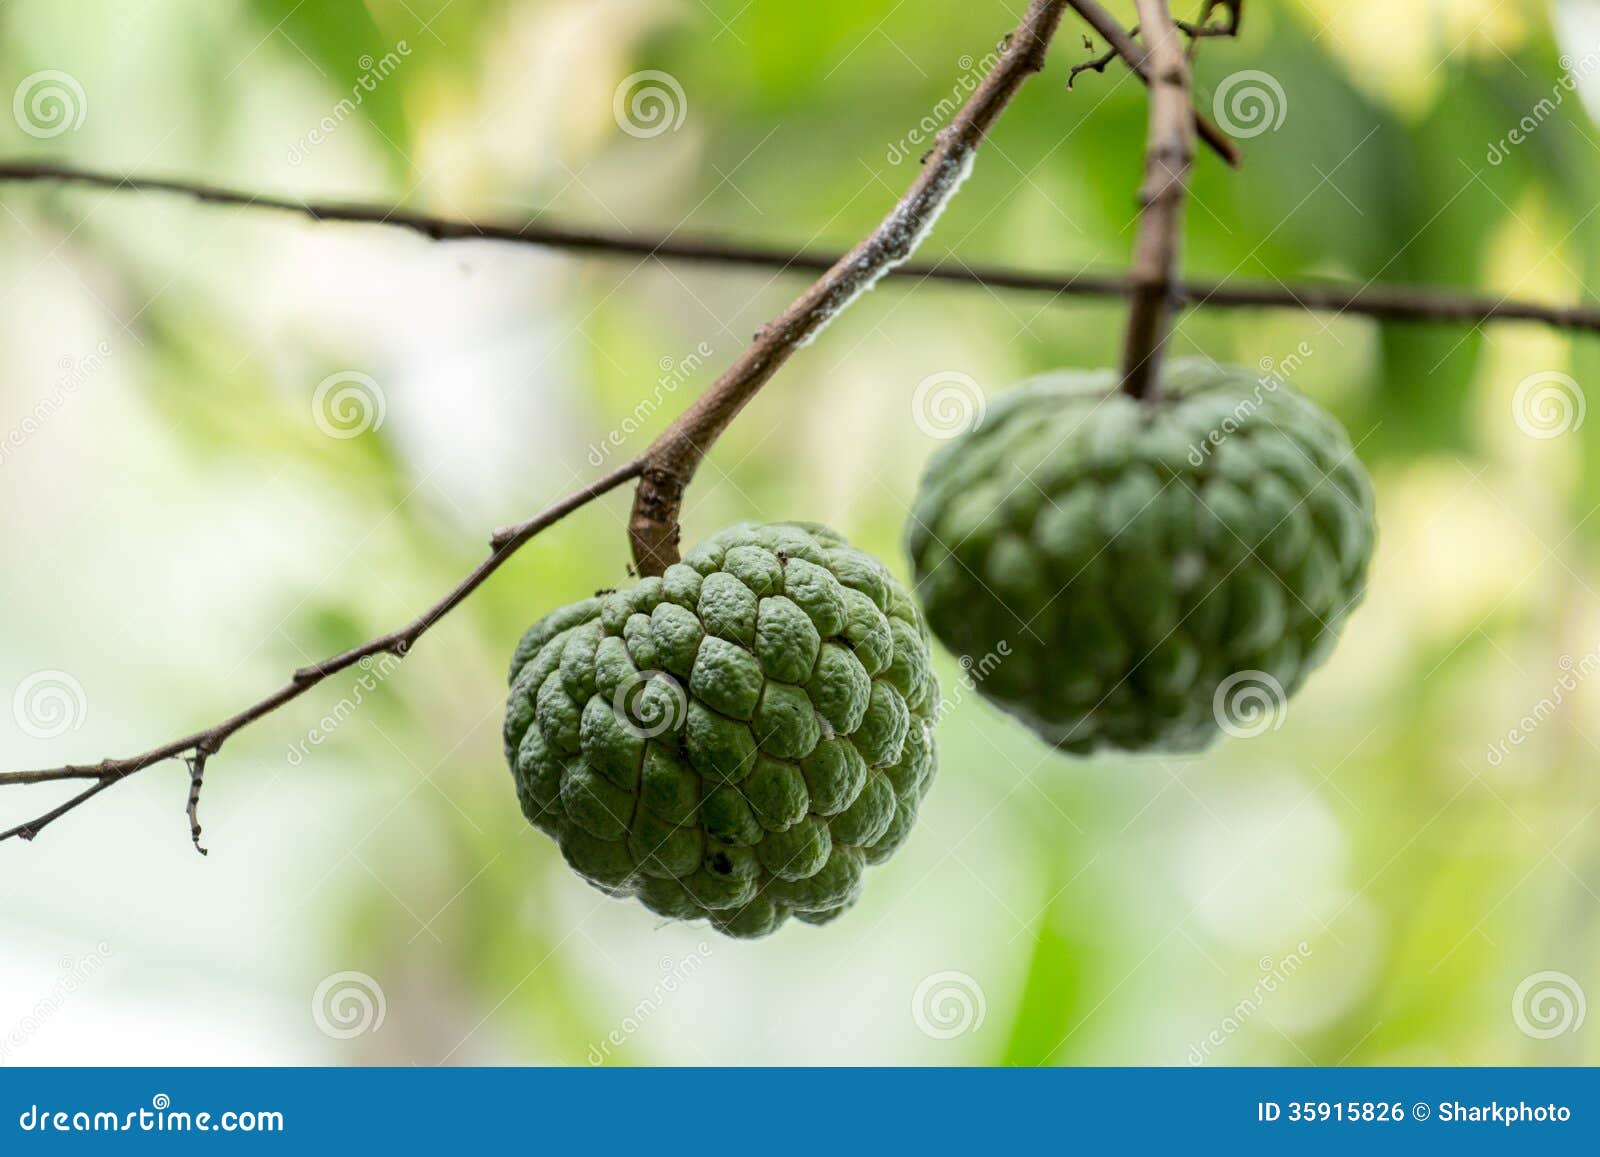 srikaya tropical fruit